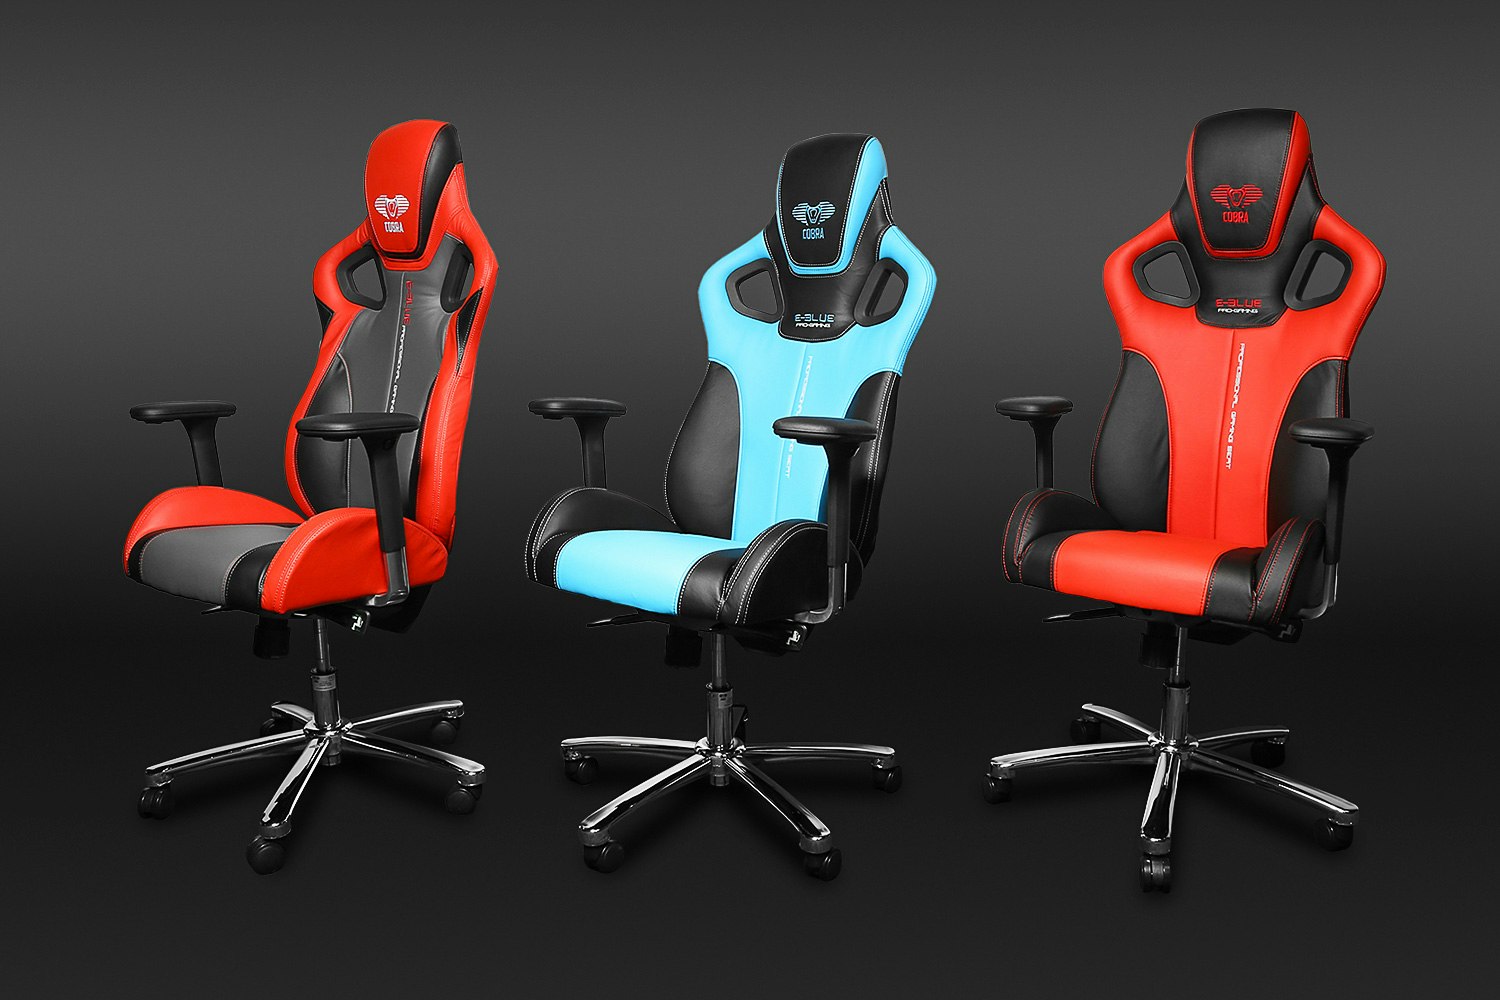 Игровое кресло Кобра. E-Blue Cobra кресло. E-Blue professional Gaming Seat Cobra офисный стул. Gaming cobra